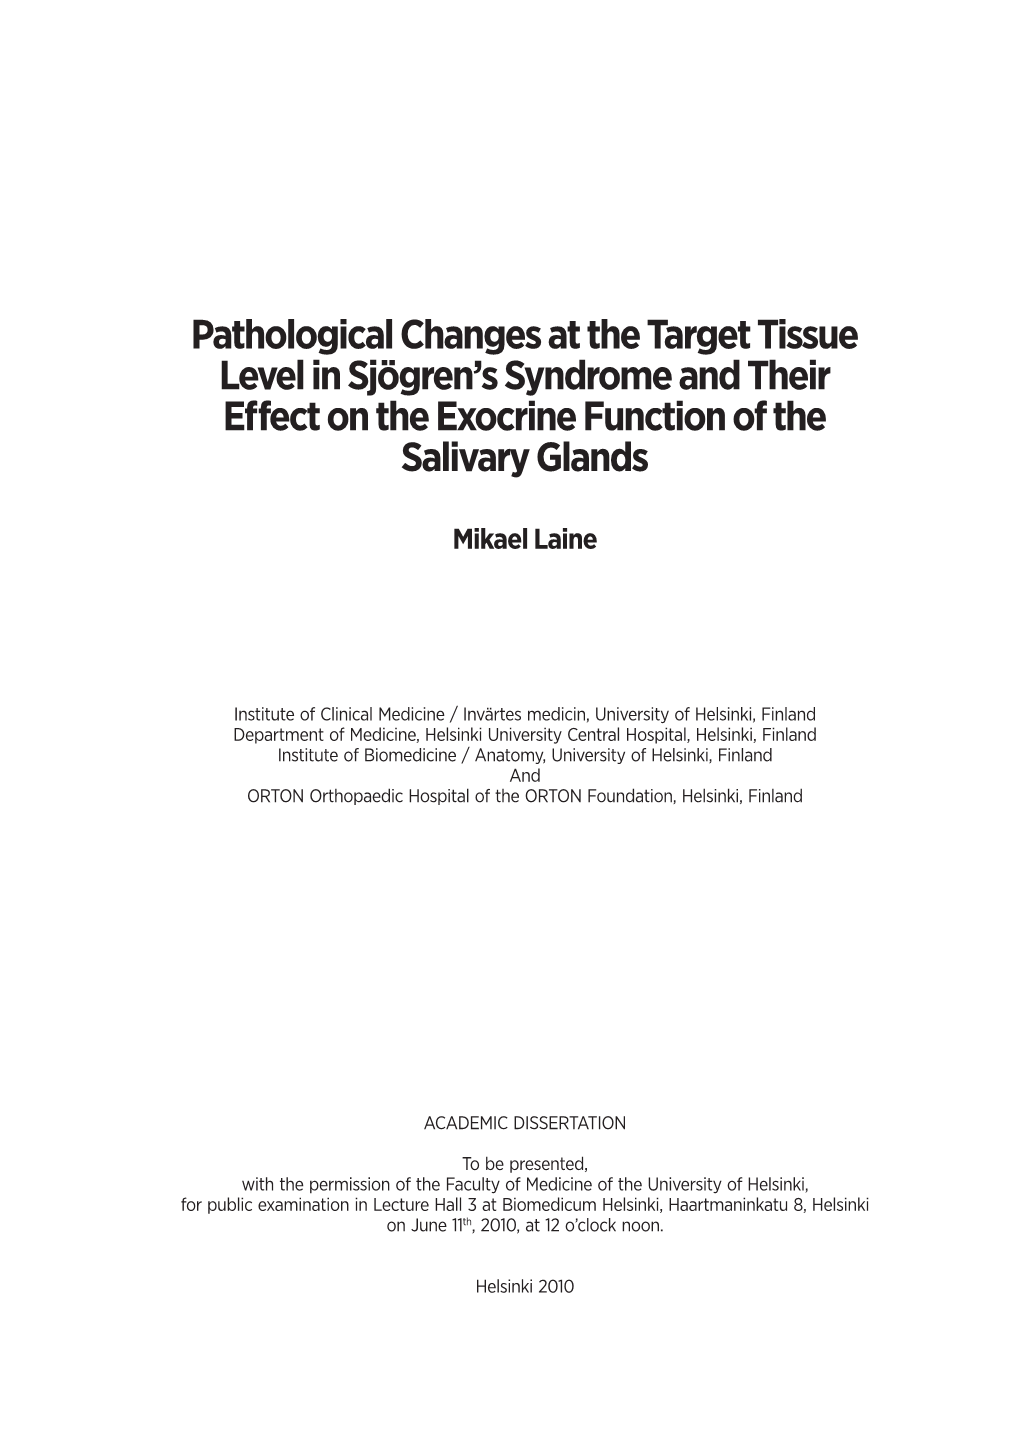 Pathological Changes at the Target Tissue Level in Sjögren's Syndrome